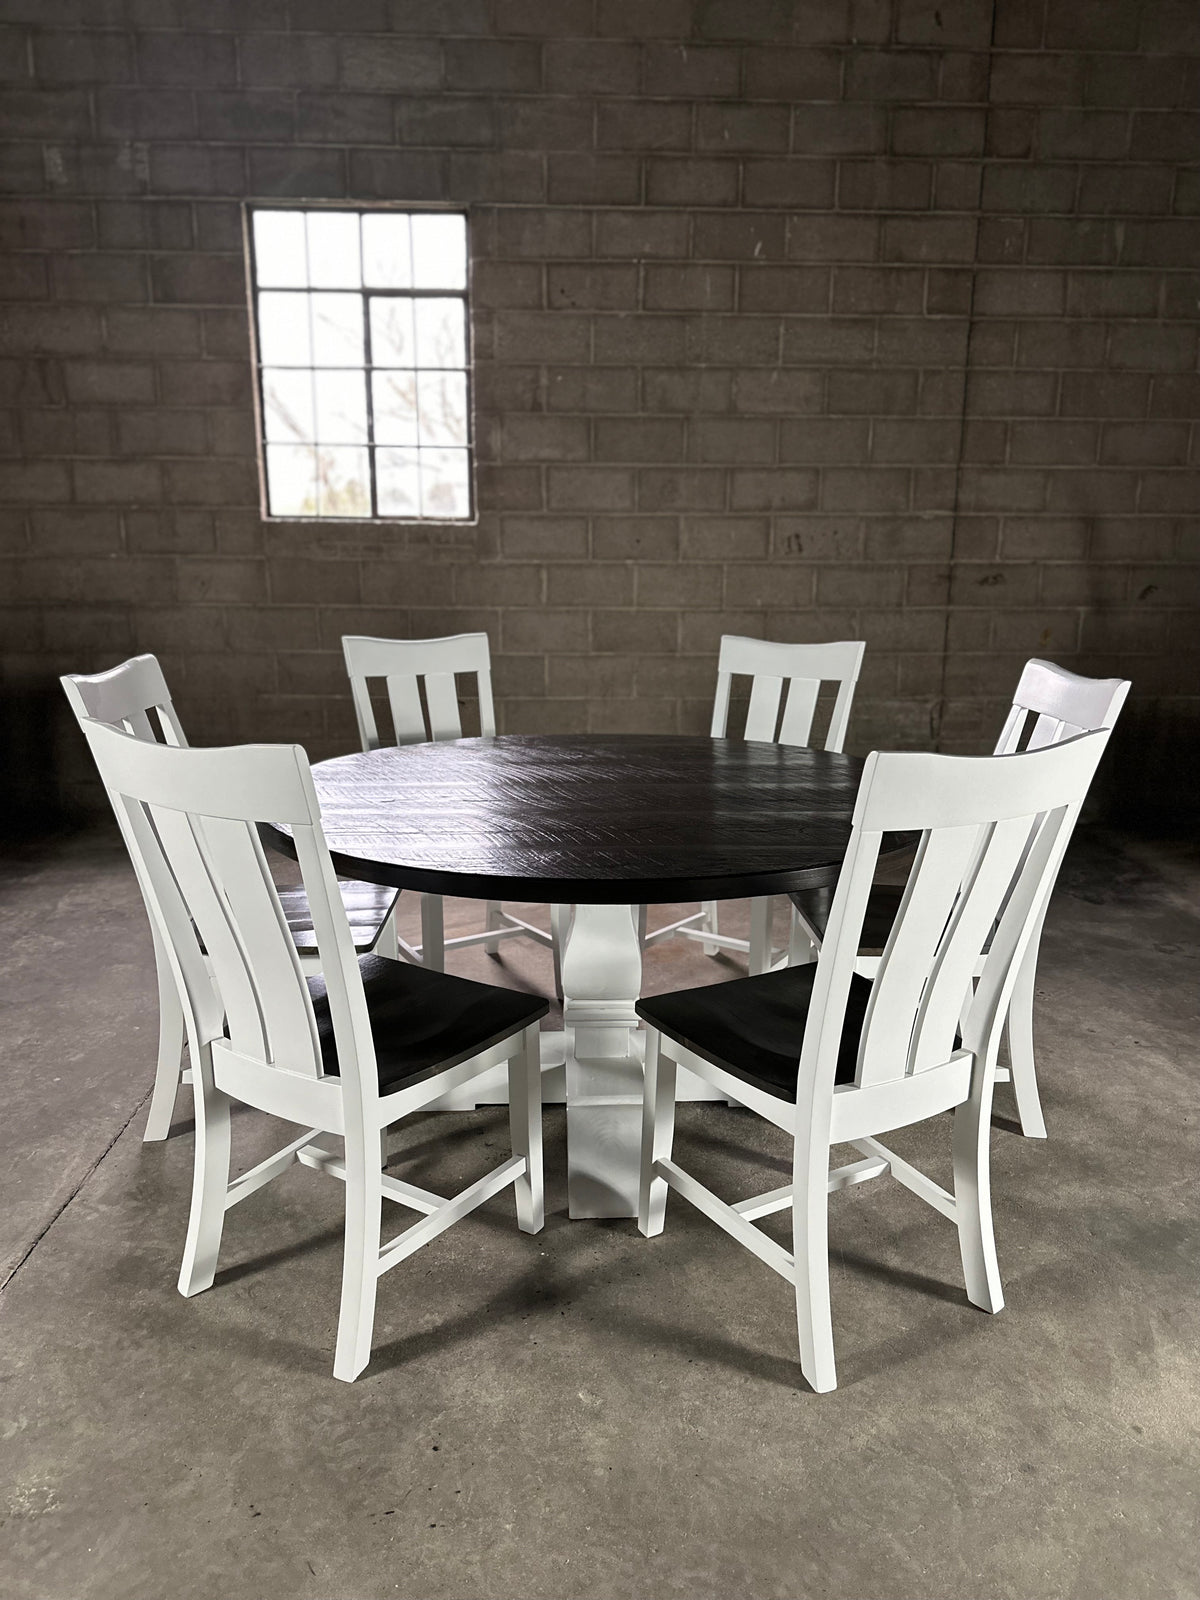 The Round Harrison Farm Table